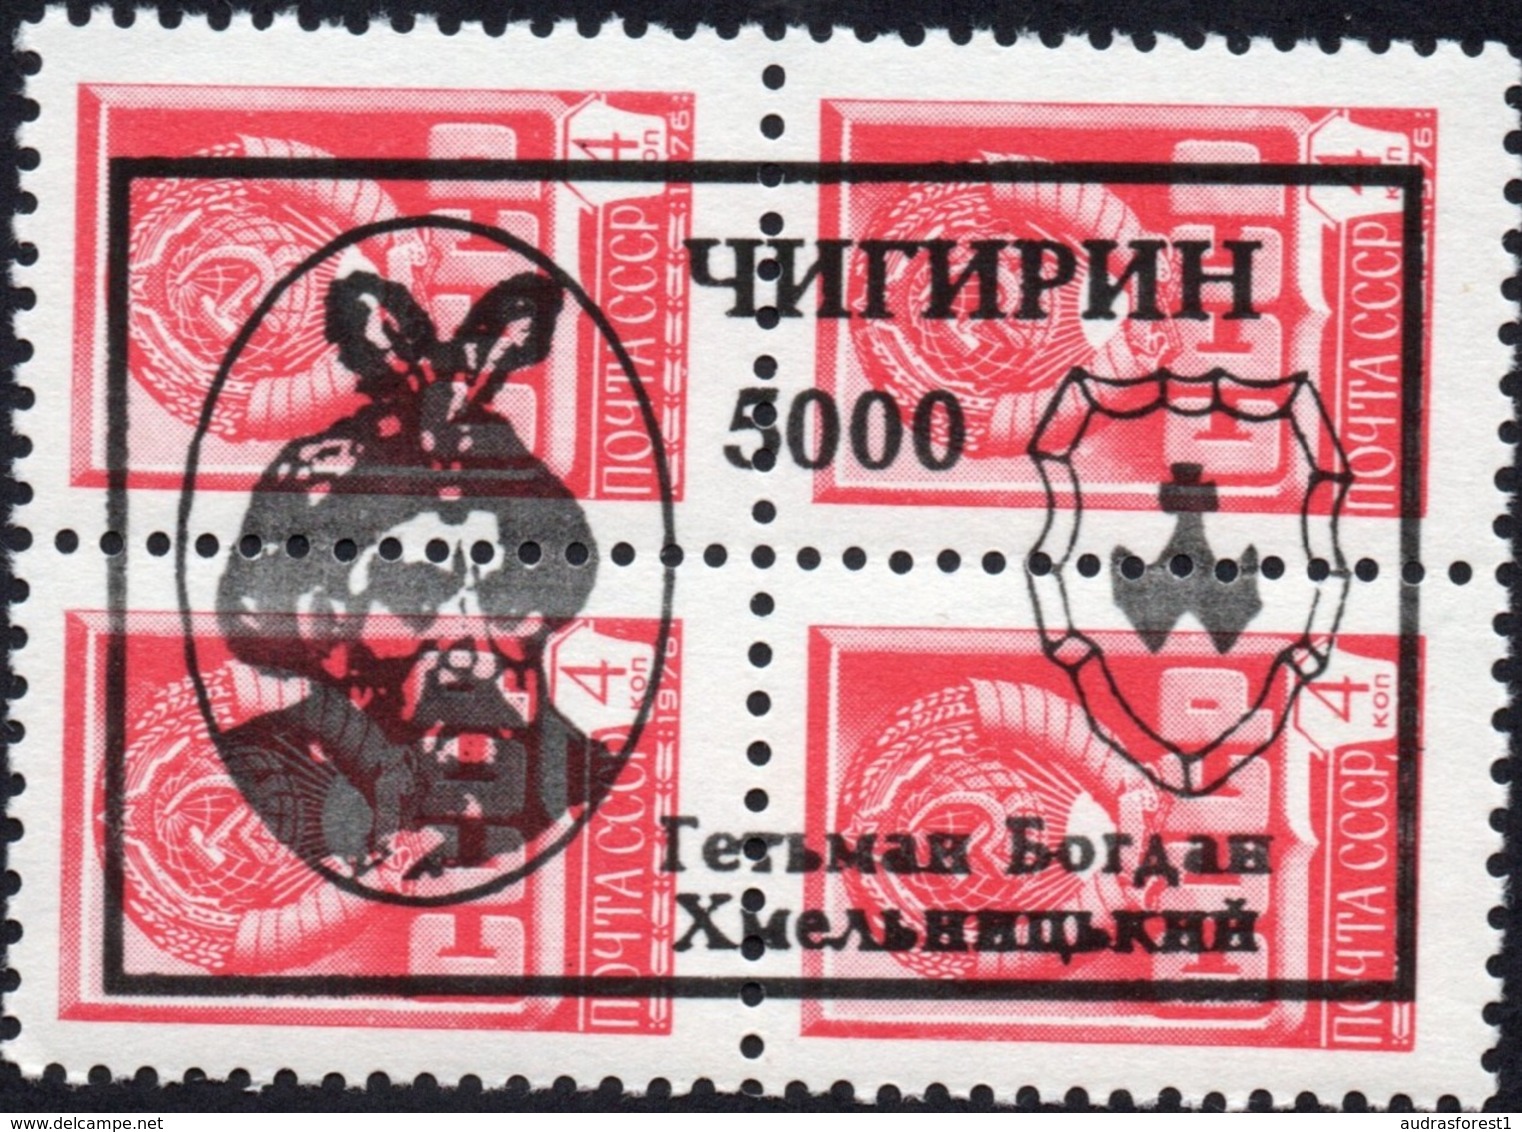 COSSACK Overprint On 4k 1976 USSR BLOCK Of 4 Definitive Stamps In 1993 Ukraine Local Post;  Chyhyryn - Ukraine